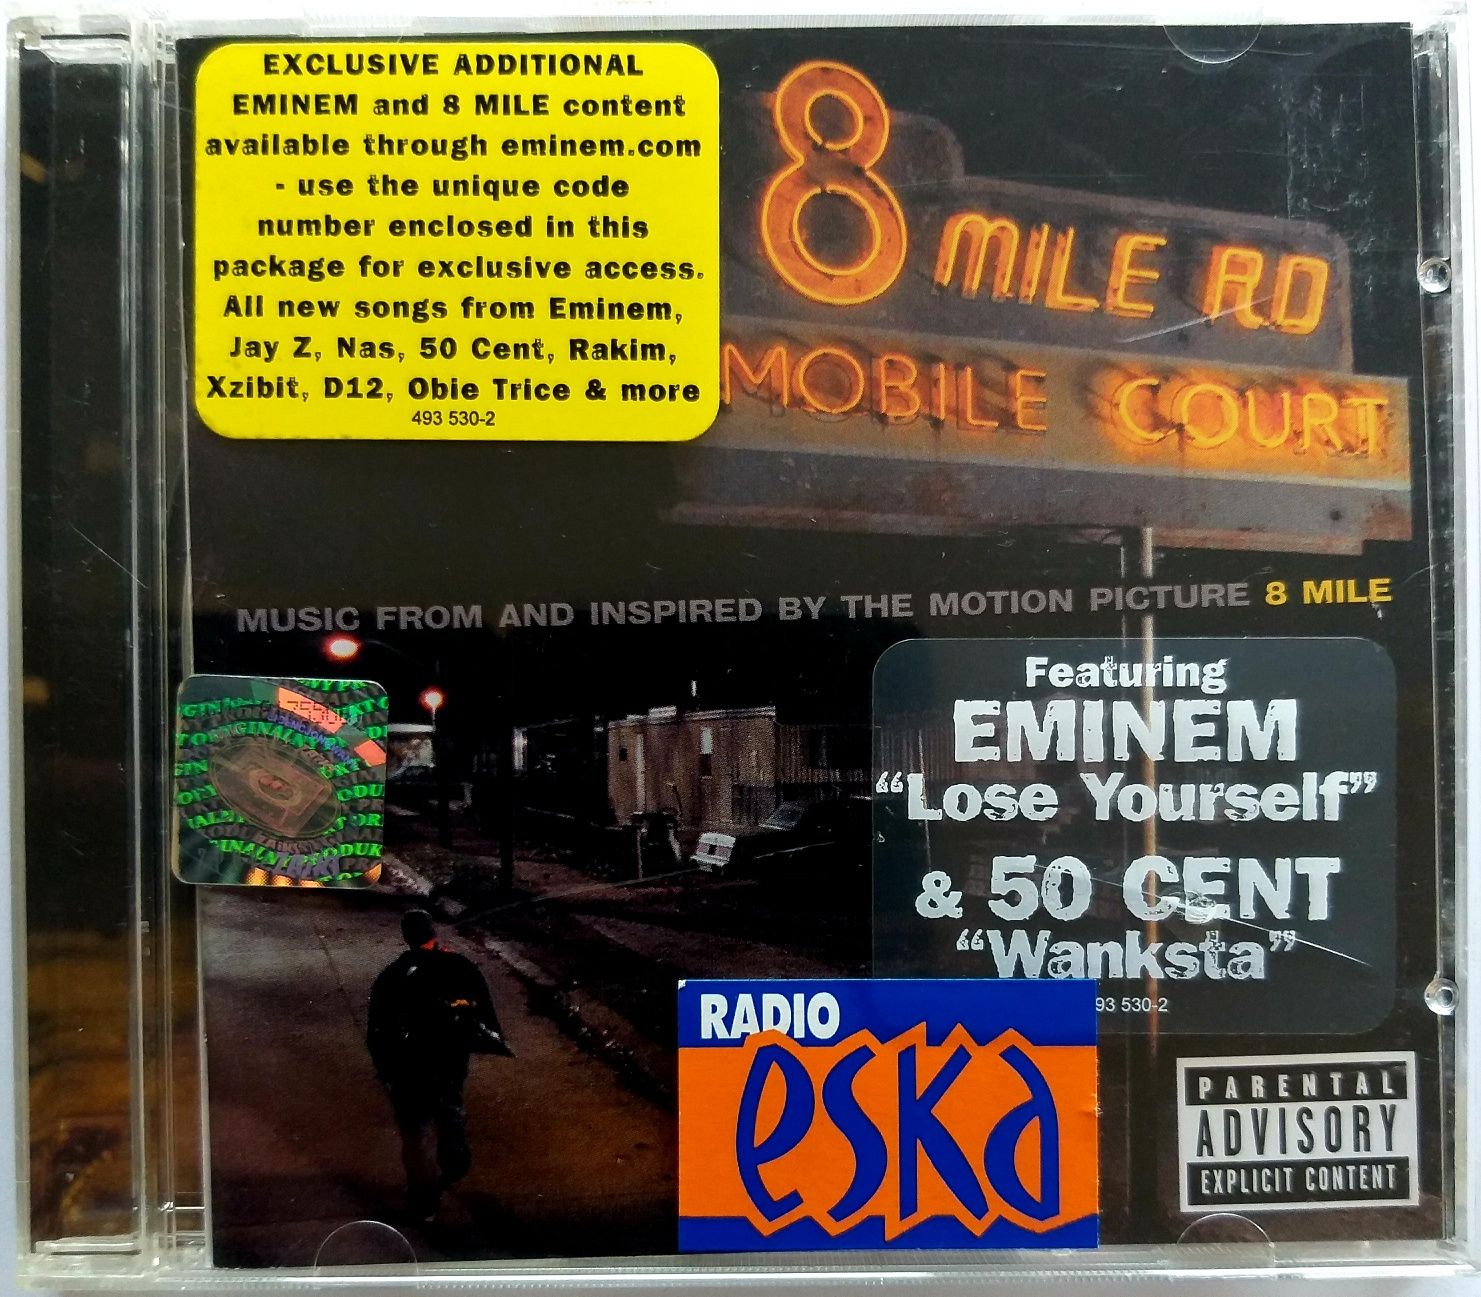 8 Mile 2002r Eminem 50 Cent Jay-z Macy Gray